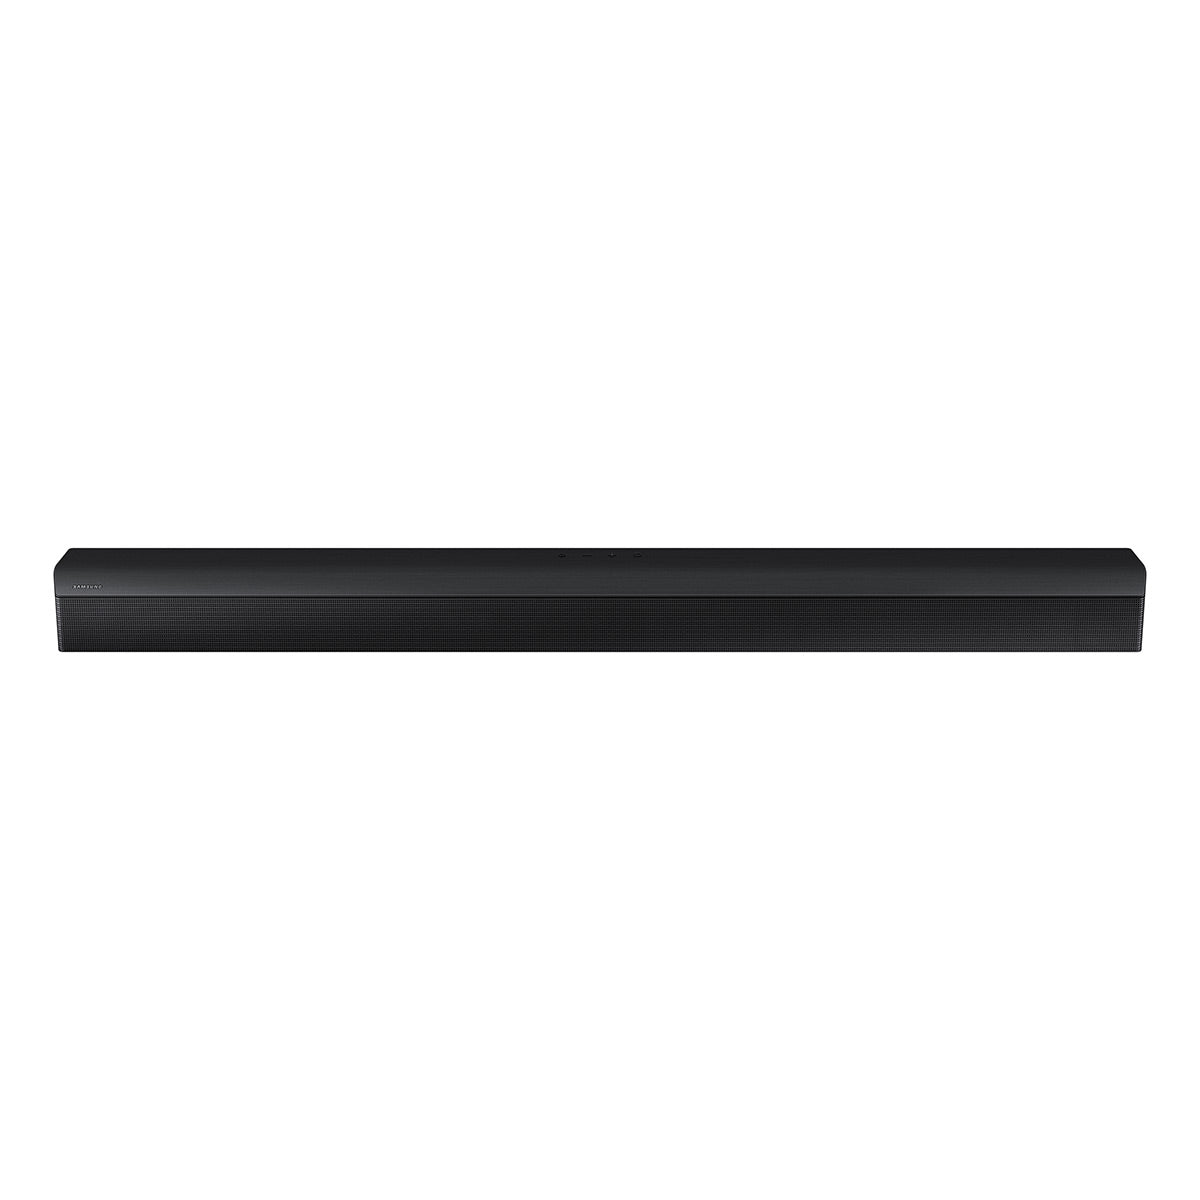 Samsung HW-B550D 3.1-Channel Soundbar with Wireless Subwoofer (Black)